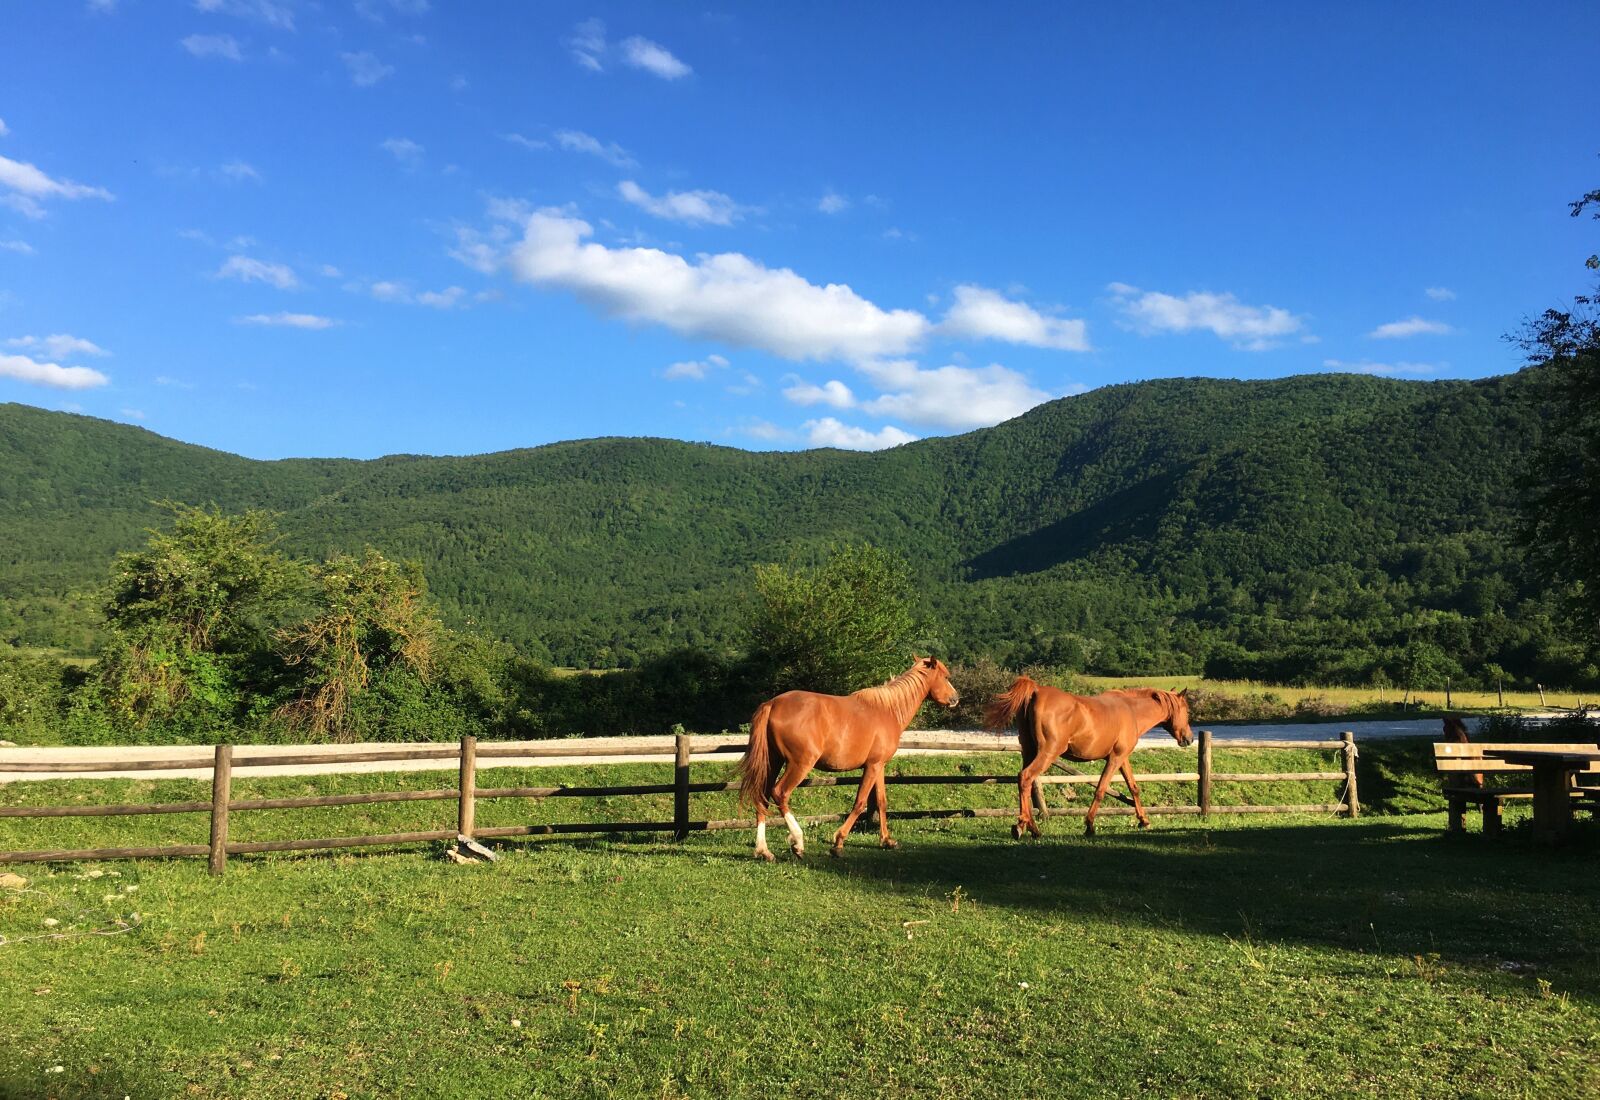 Apple iPhone 6s sample photo. Nature, horses, landscape photography